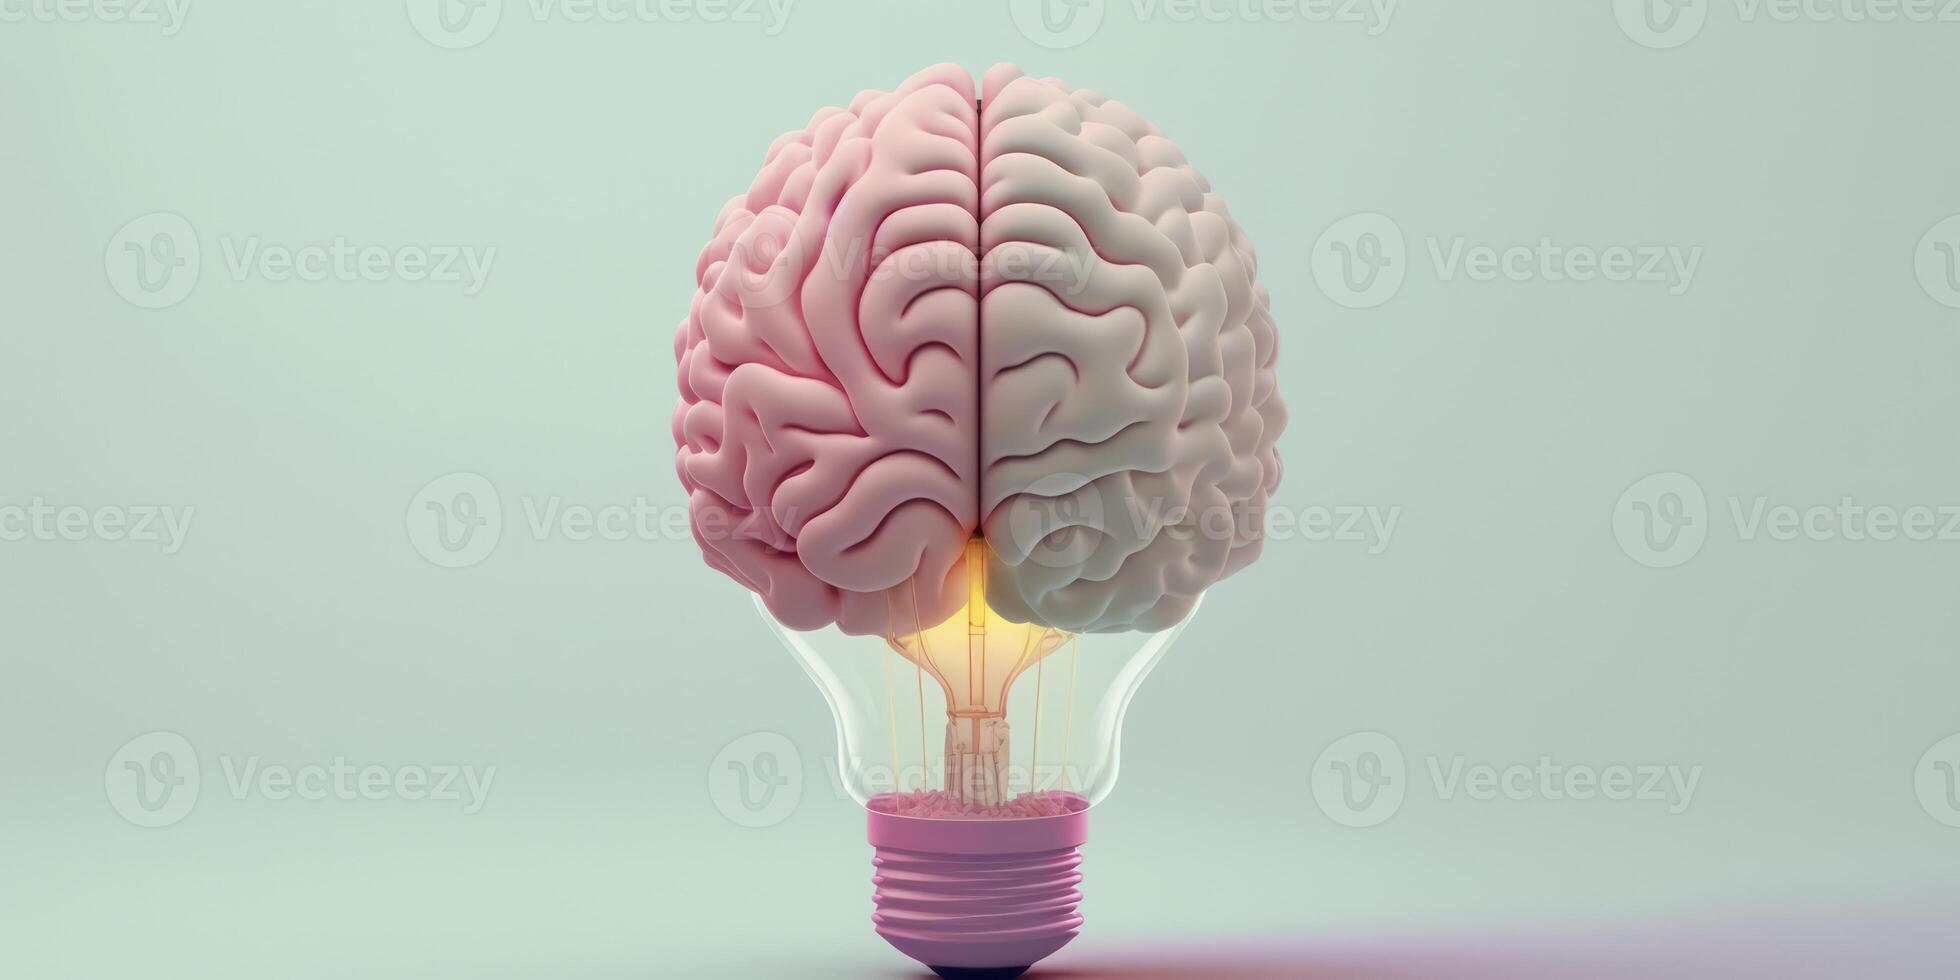 hersenen binnen groot licht lamp illustratie, creativiteit ai gegenereerd foto